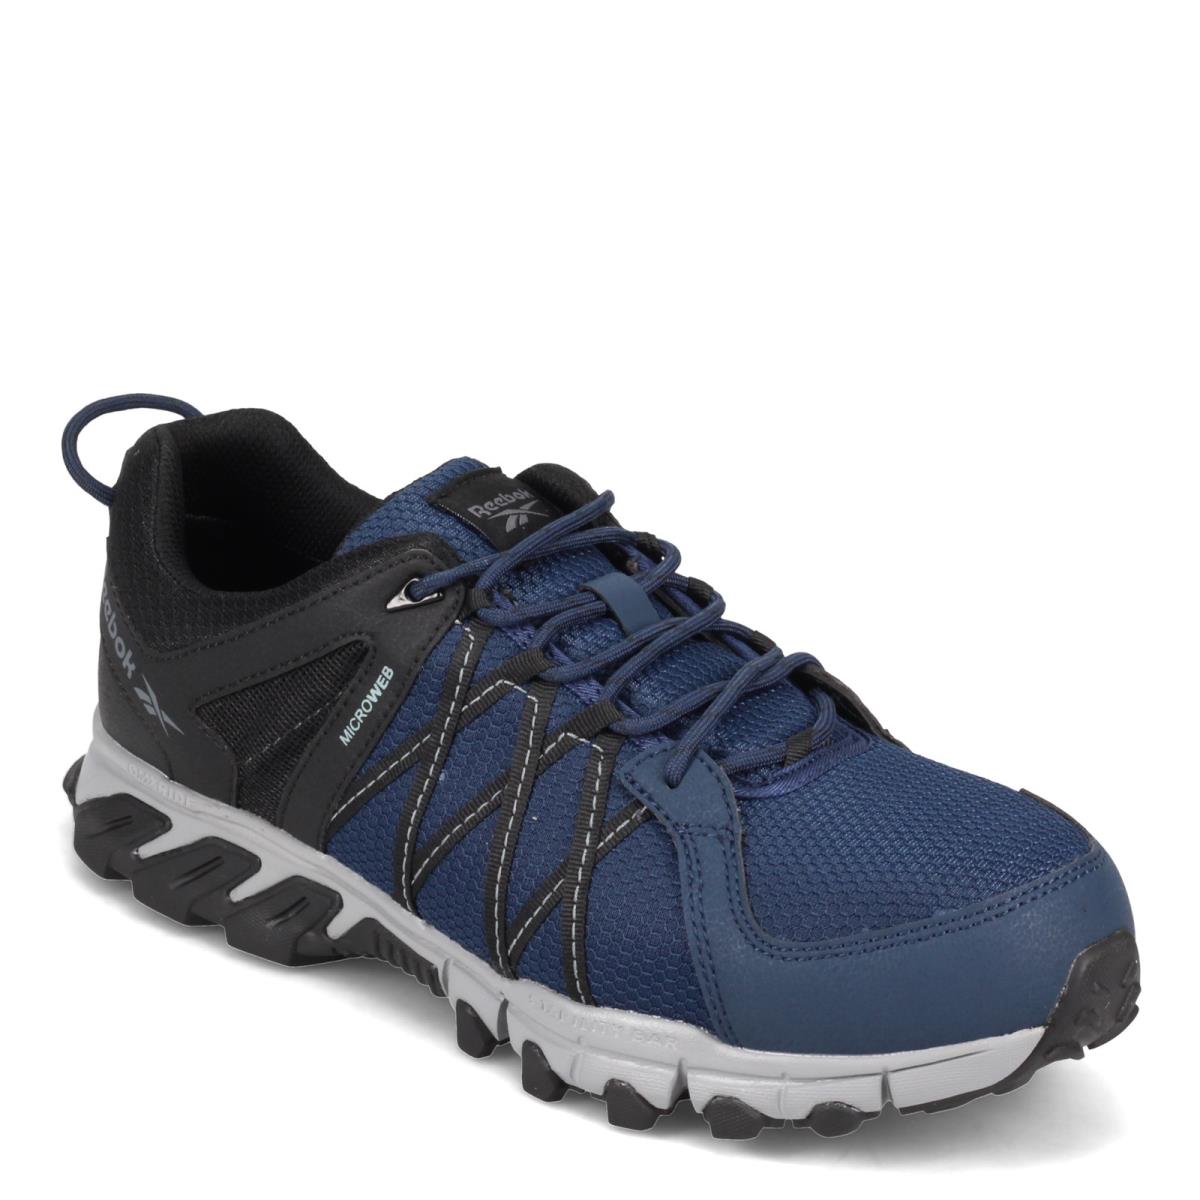 Men`s Reebok Work Trail Grip Low Work Shoe RB3403 Navy/black/grey Synthetic W